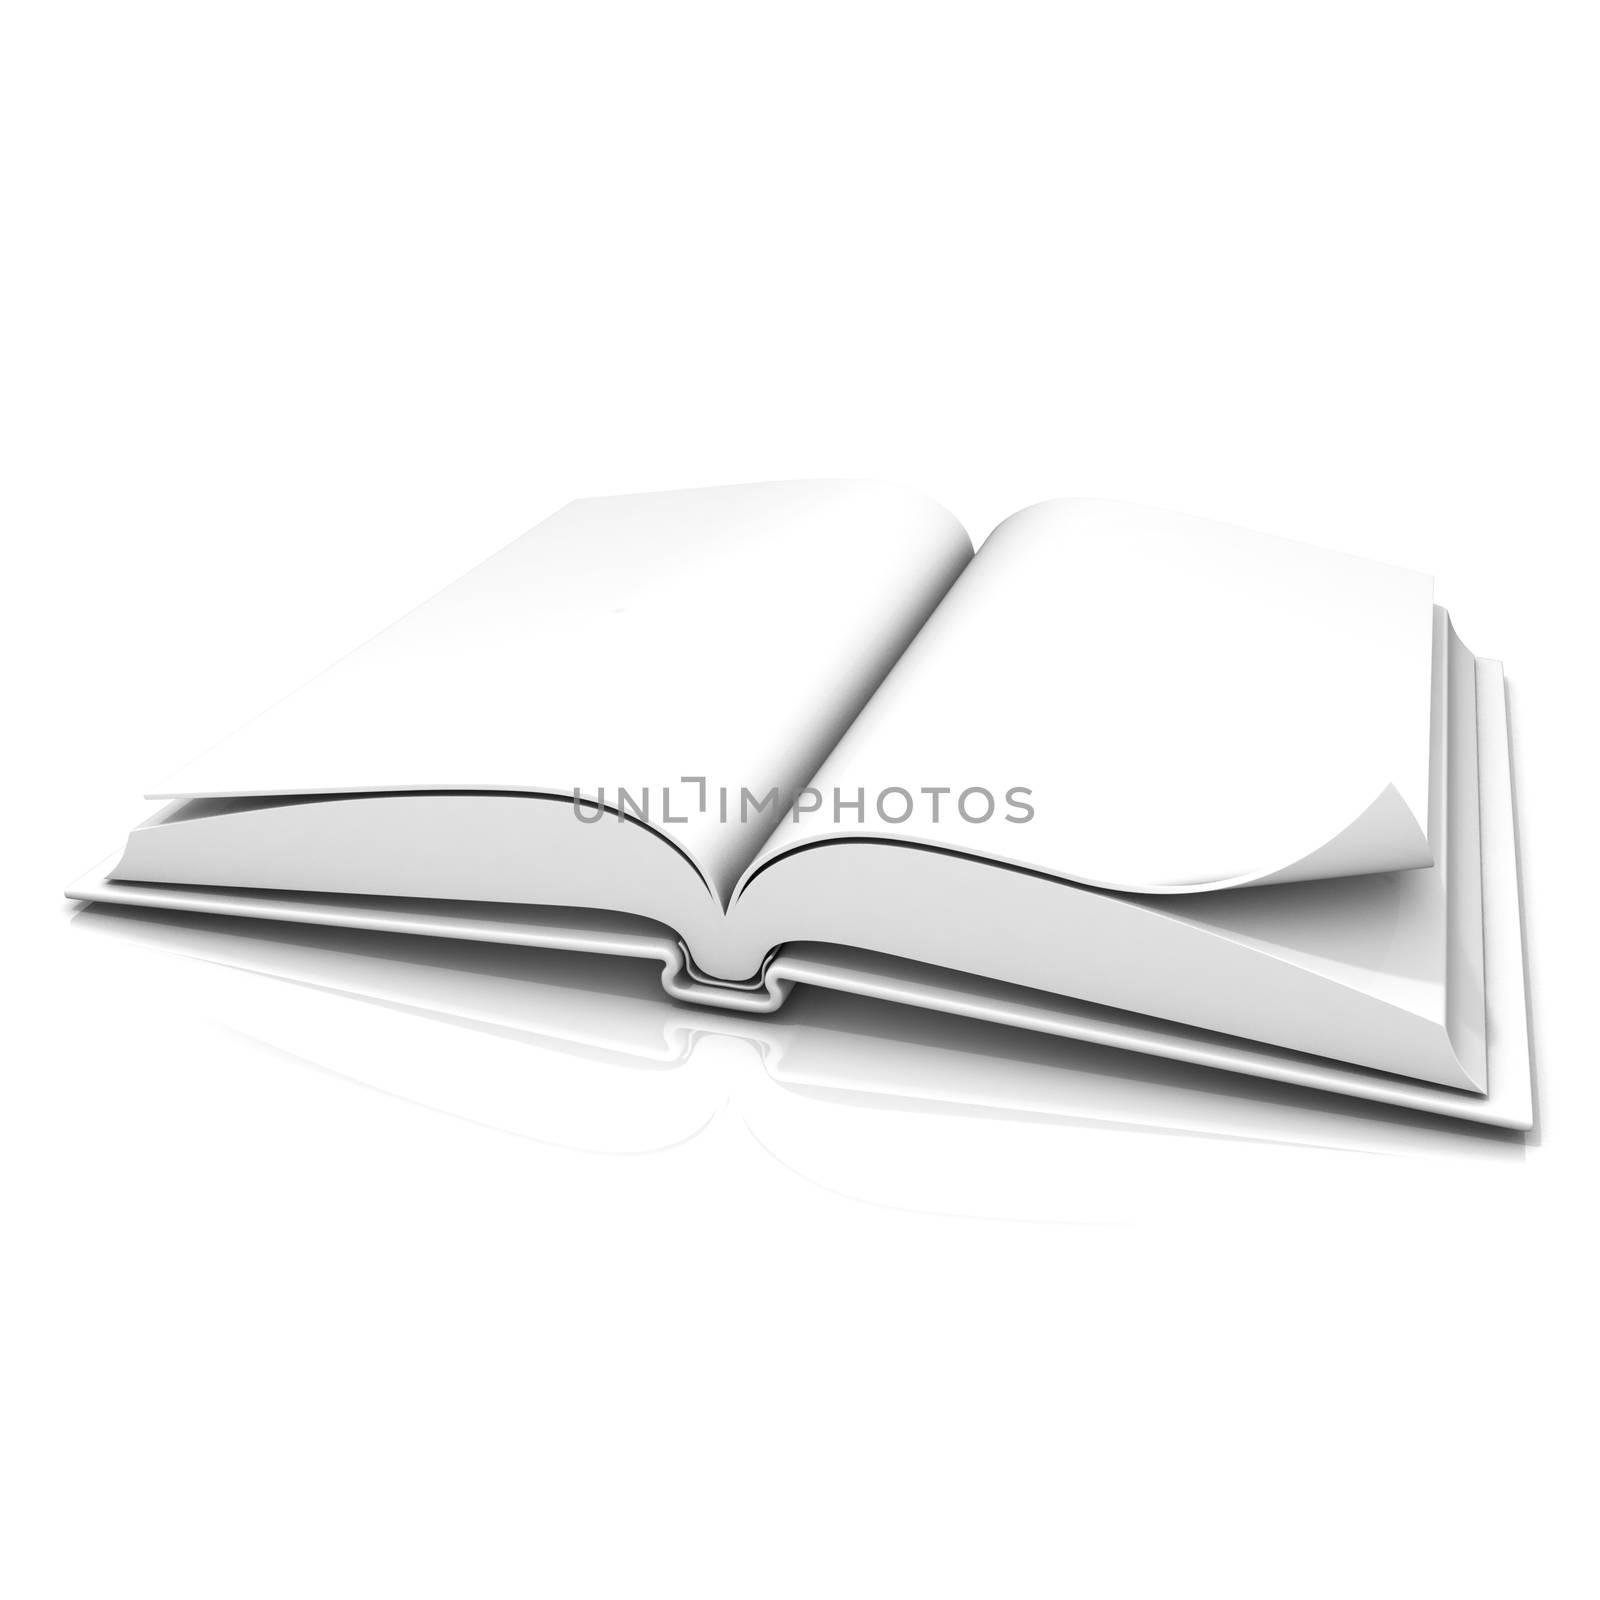 Blank open white book by djmilic